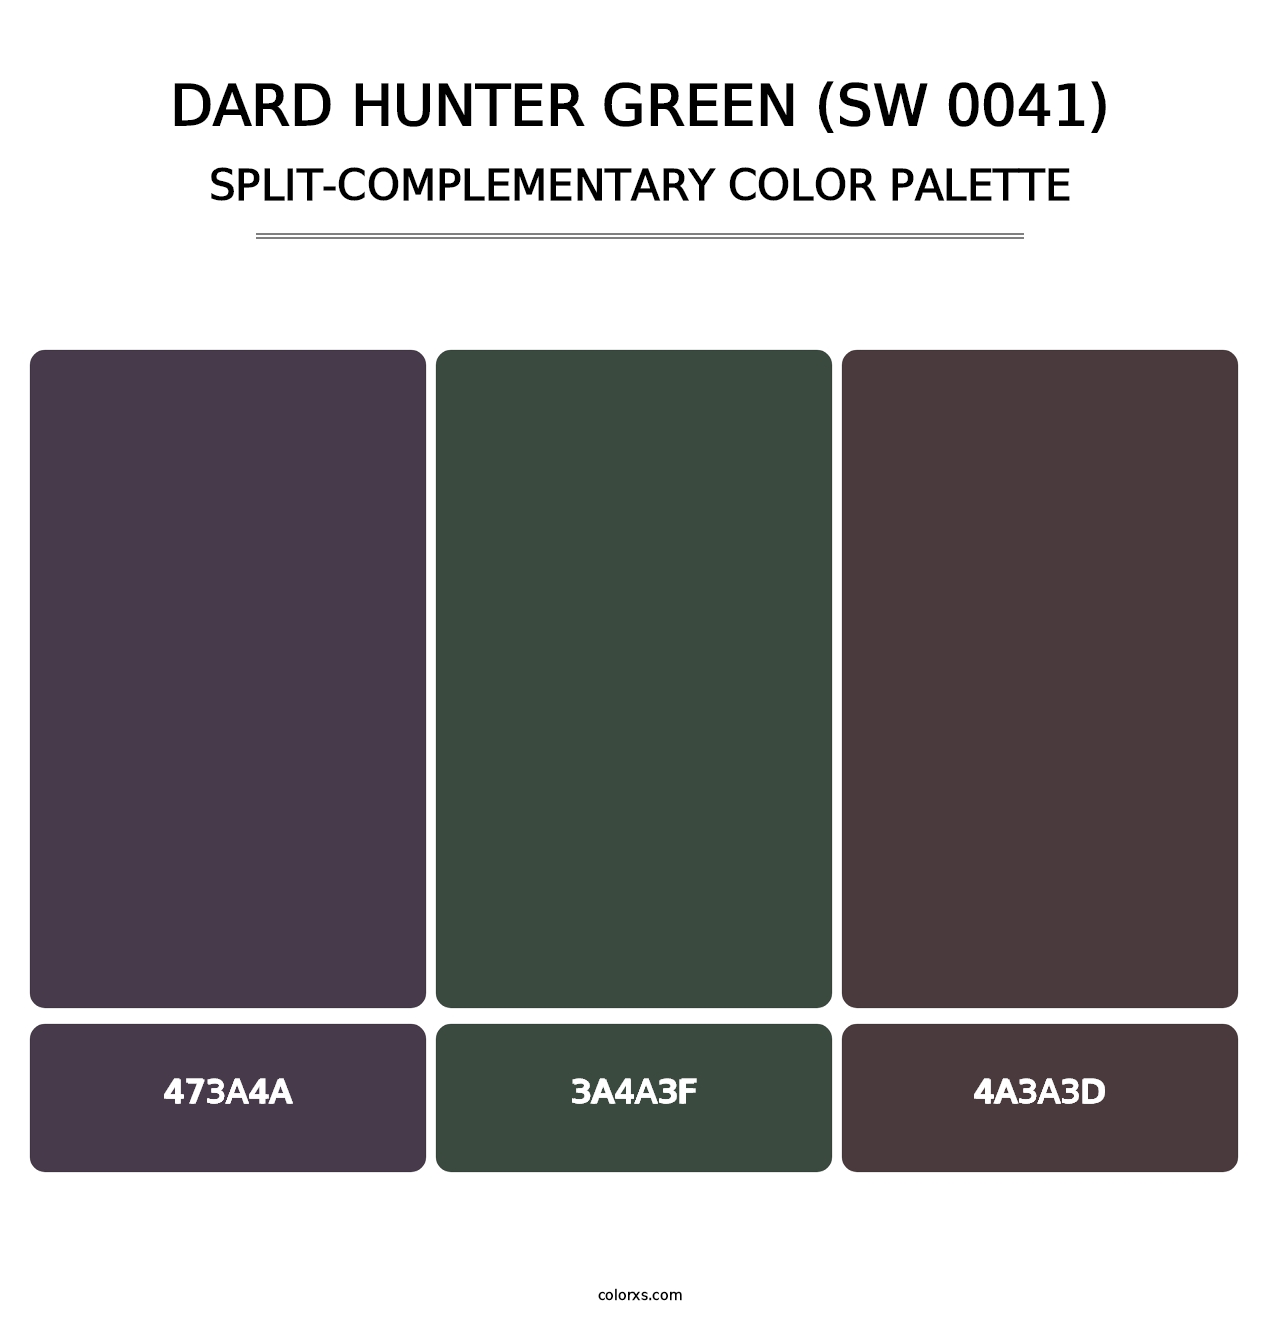 Dard Hunter Green (SW 0041) - Split-Complementary Color Palette